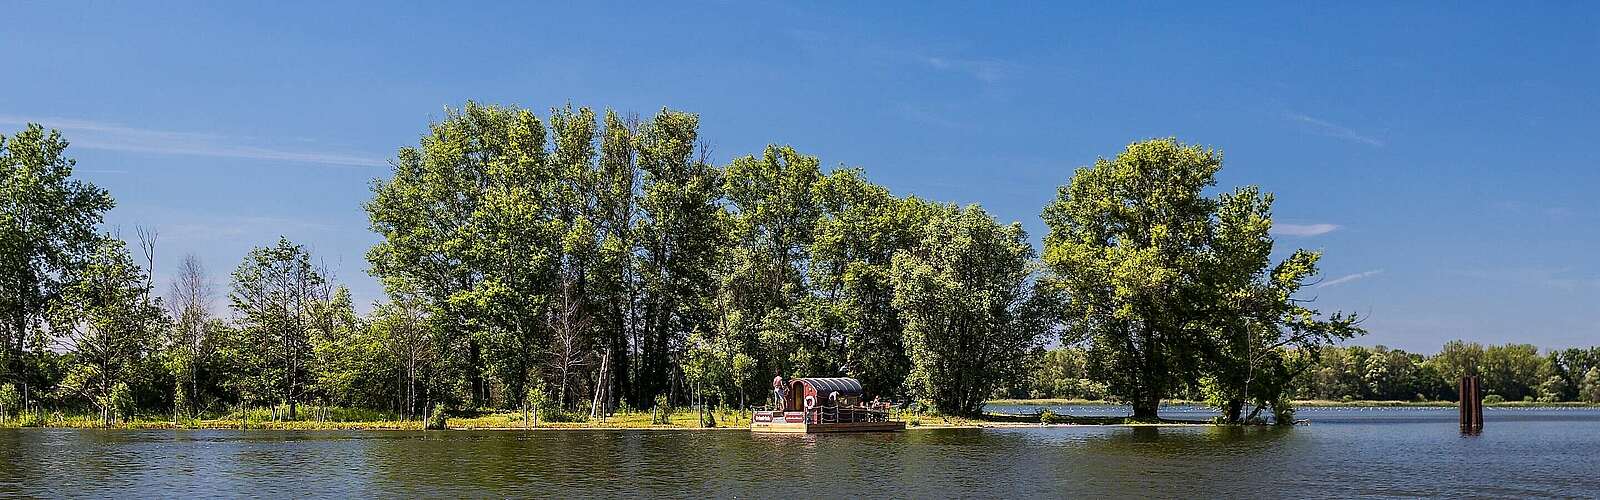 Floß auf der Havel,
        
    

        Foto: Fotograf / Lizenz - Media Import/Yorck Maecke